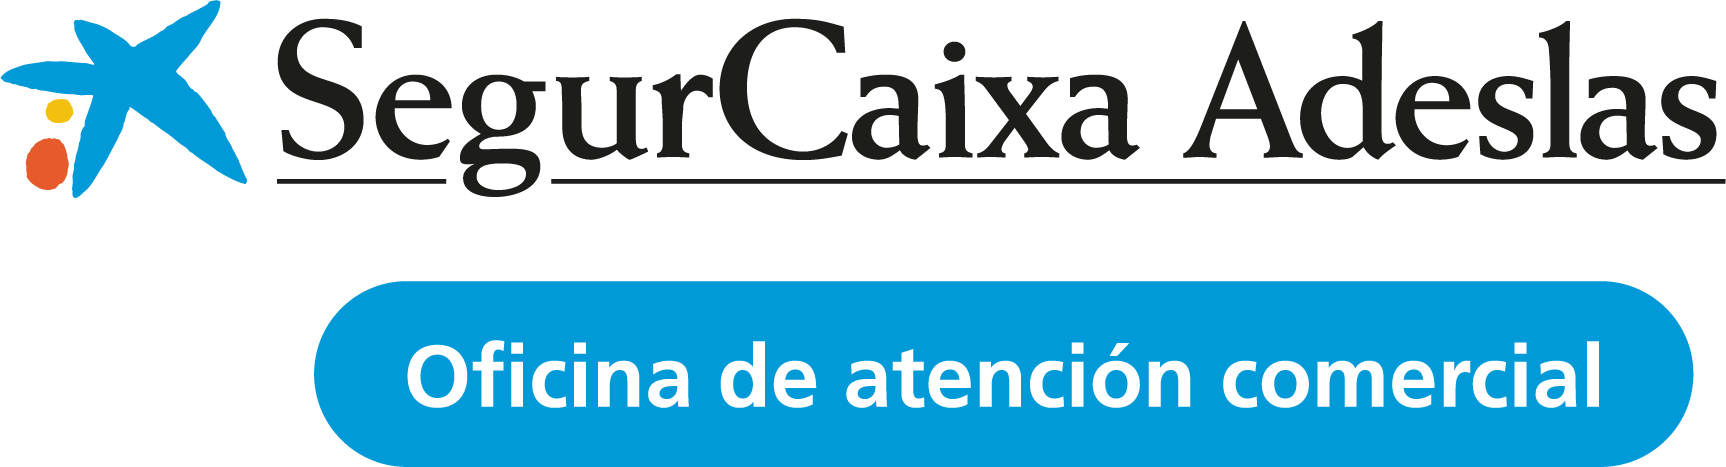 International Office of SegurCaixa Adeslas - the No.1 Insurance Company in Spain